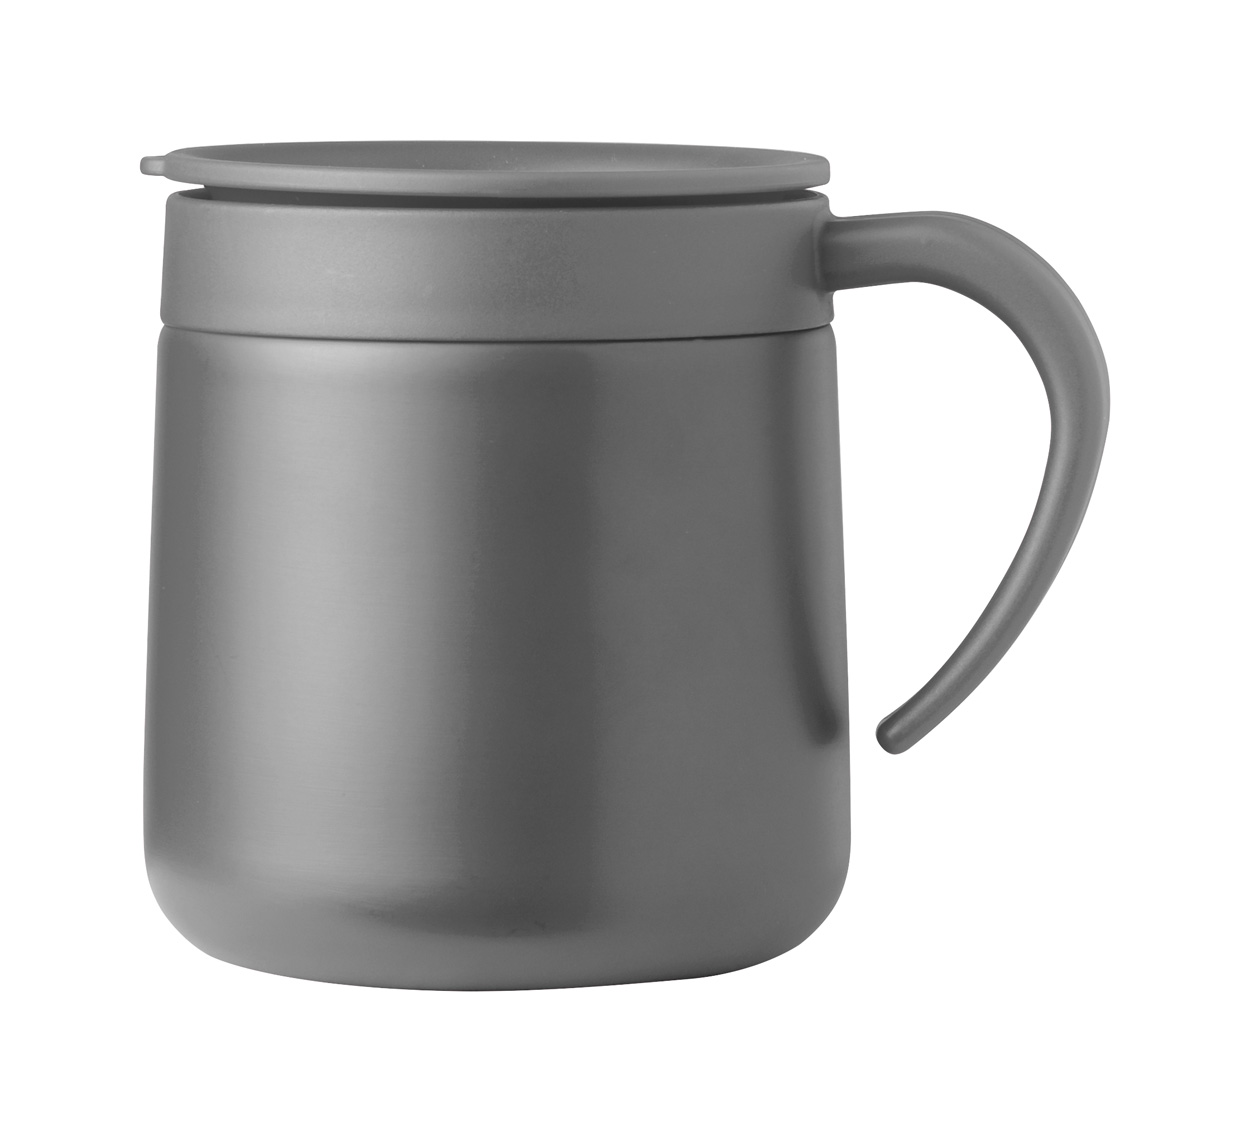 Bokat thermo mug - grey